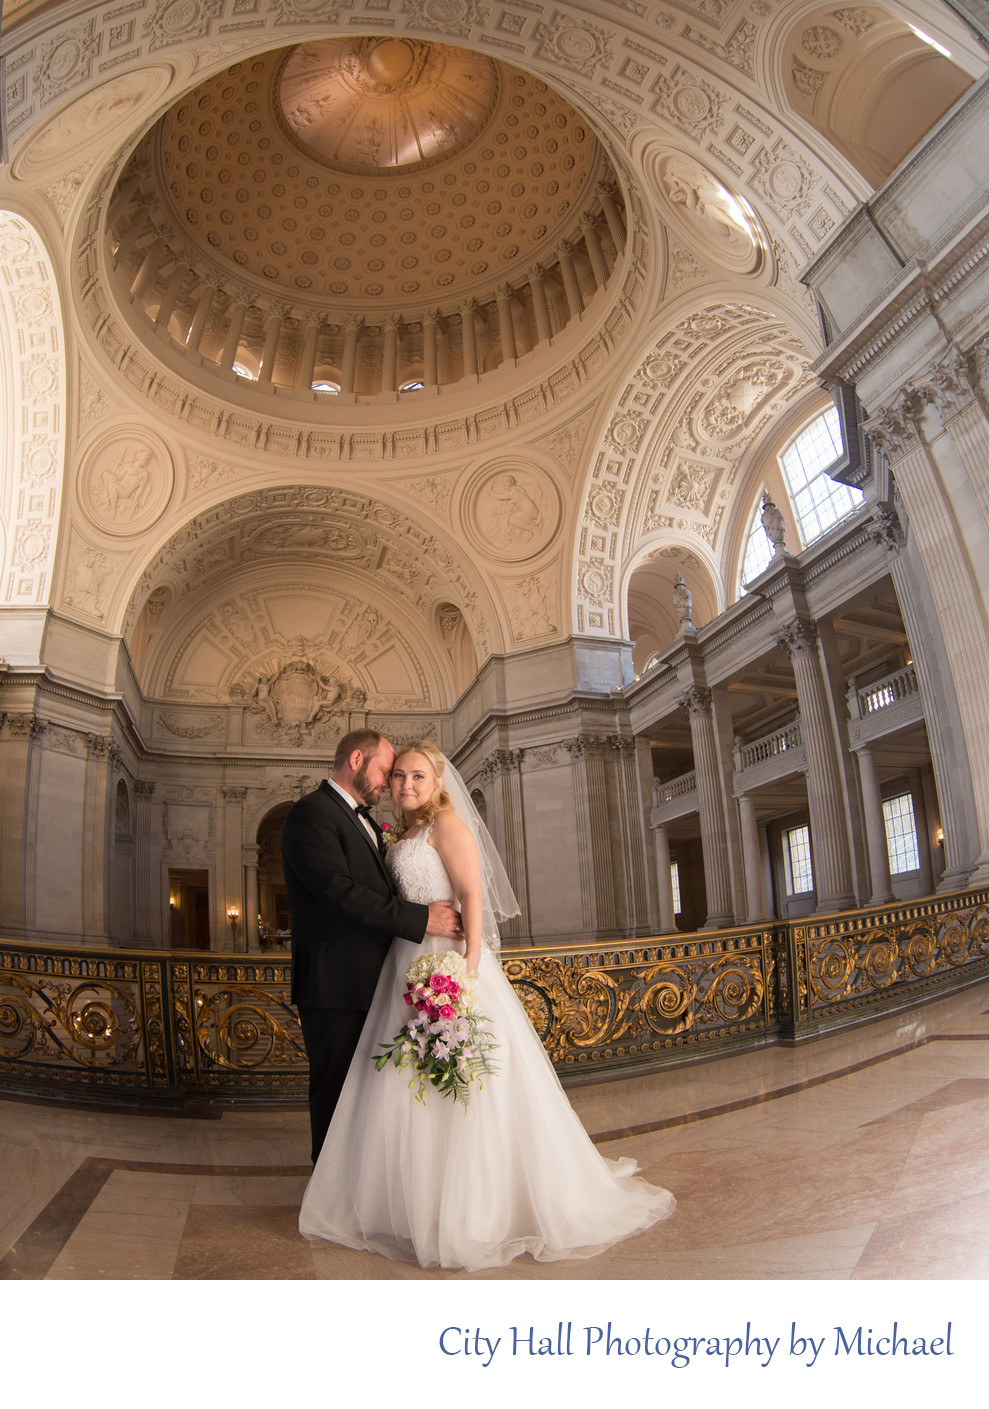 Romantic City Hall Wedding Photographer with Fish-eye Lens